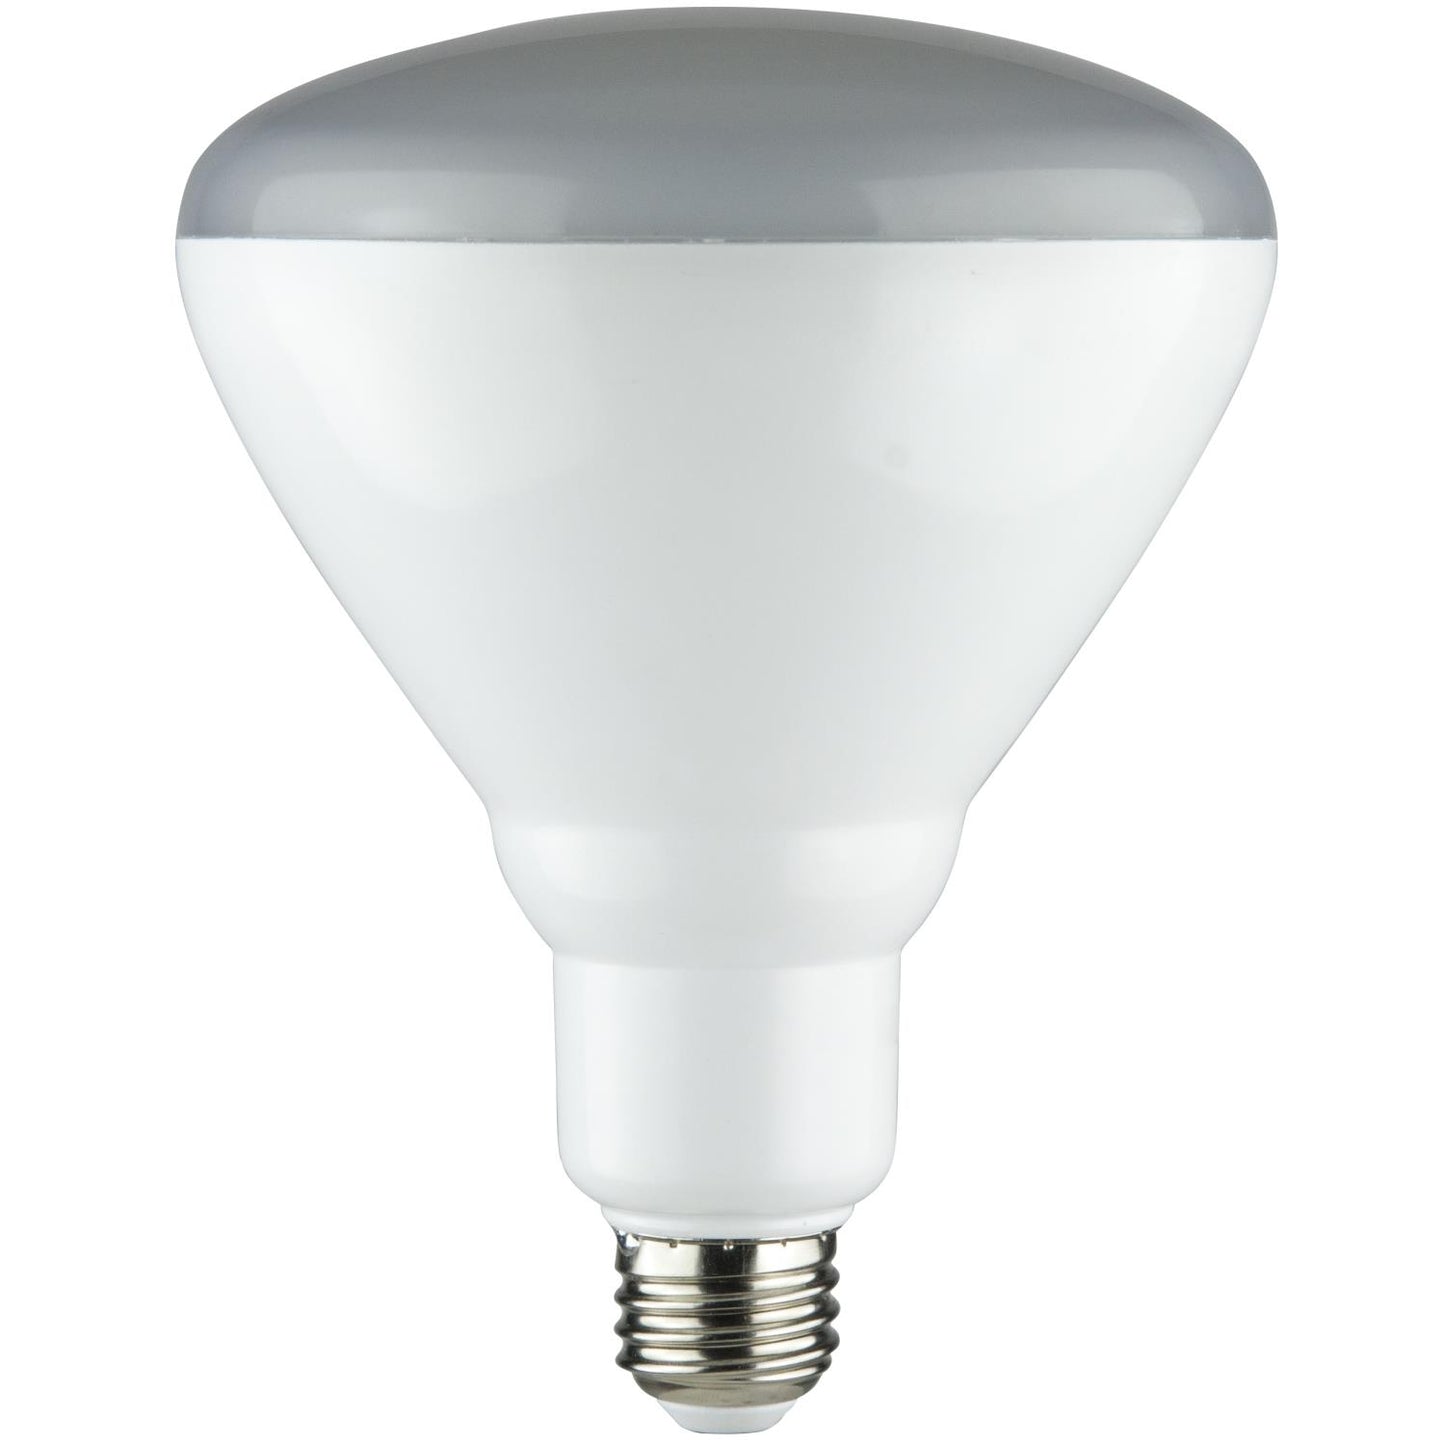 Sunlite LED BR40 Reflector 14W (60W Equivalent) Light Bulb Medium (E26) Base, Daylight